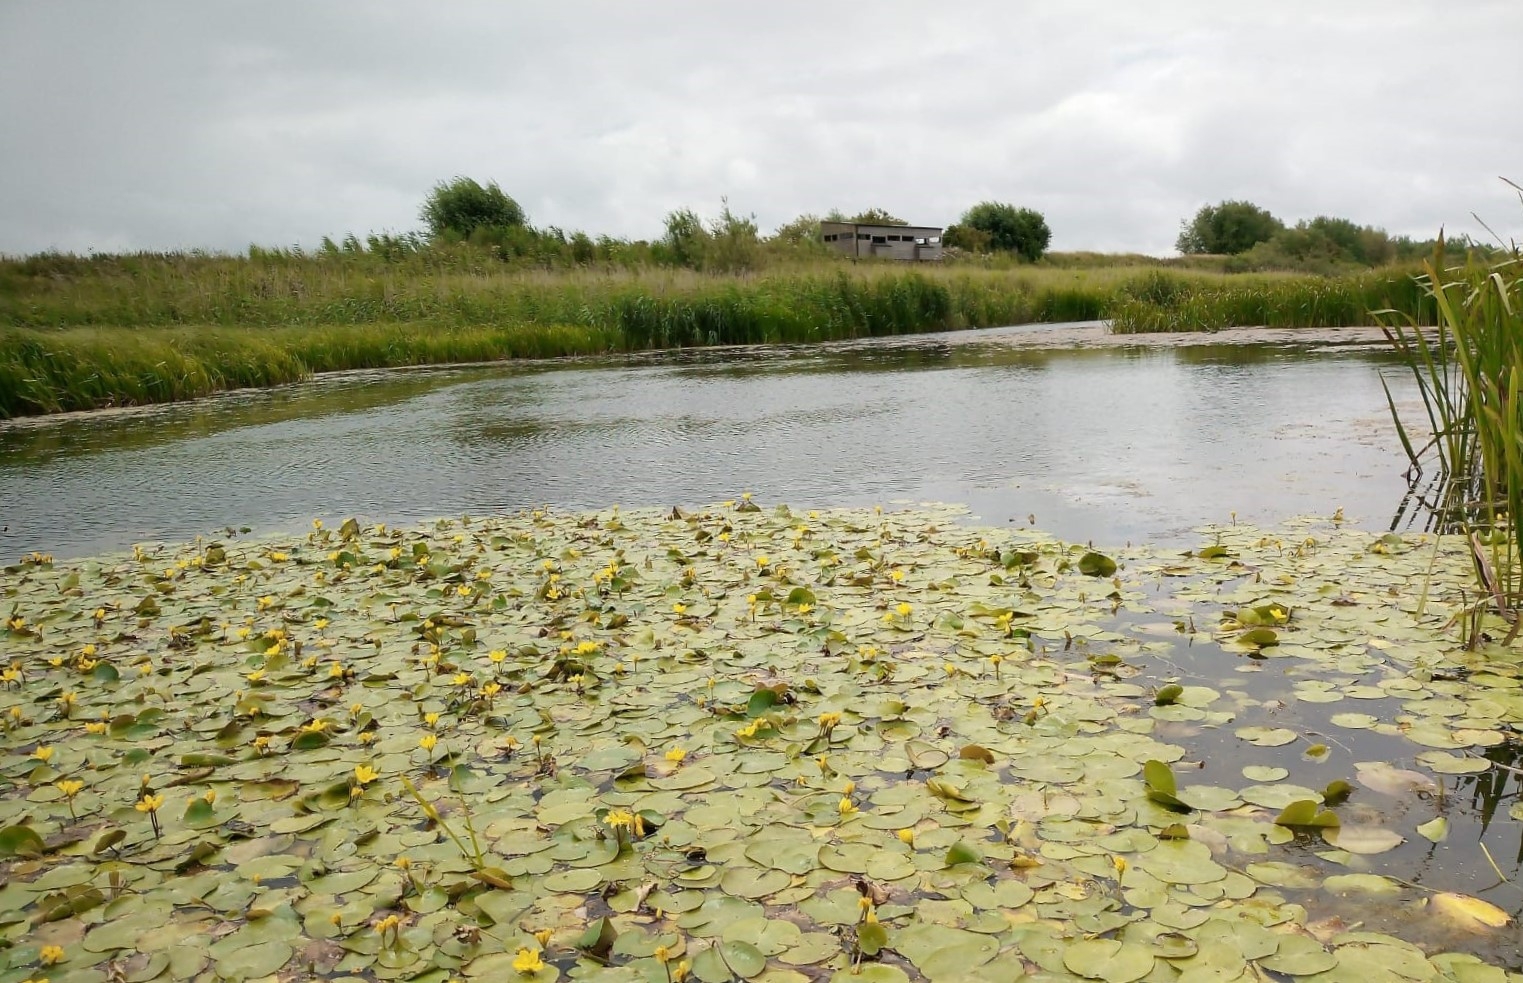 Reserve update - bringing wetland wildlife to you